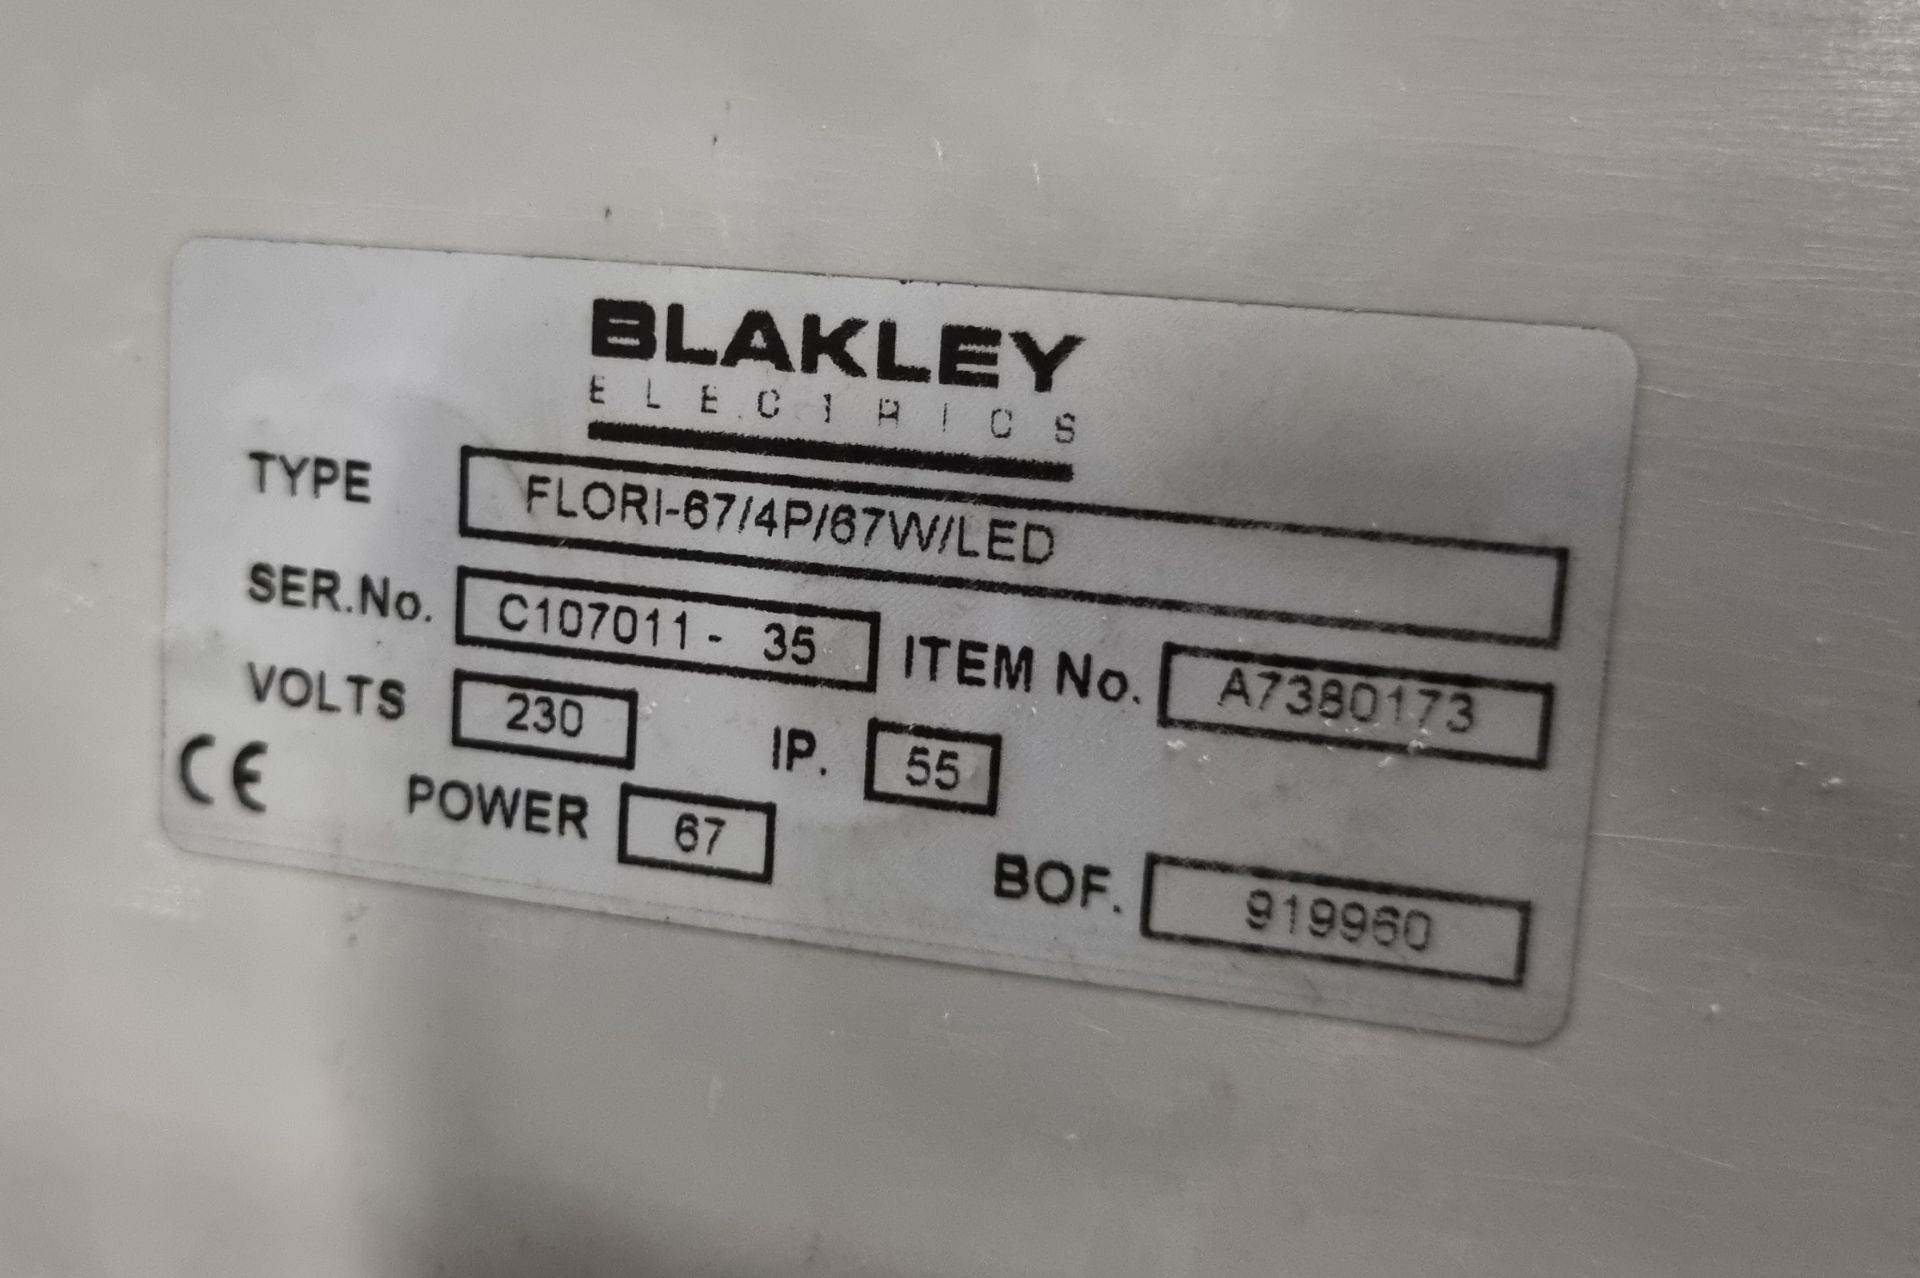 8x Lighting assemblies - 6x Blakley Electrics FLORI-67/4P/67w/LED Lighting 230V - Image 3 of 4